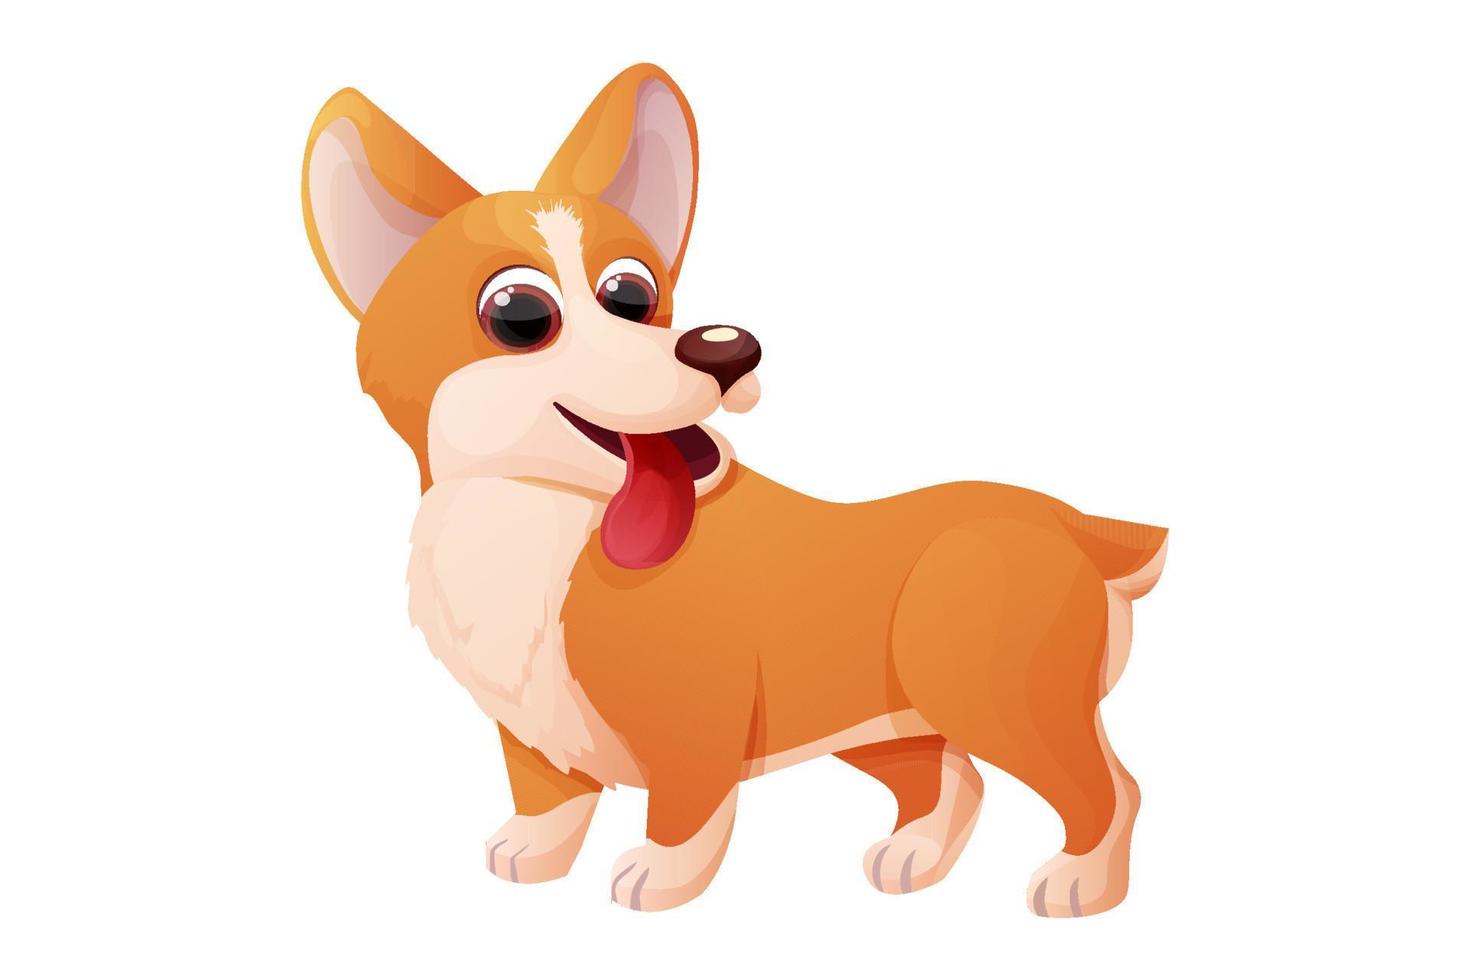 lindo perro corgi de pie, adorable mascota en estilo de dibujos animados aislado sobre fondo blanco. vector